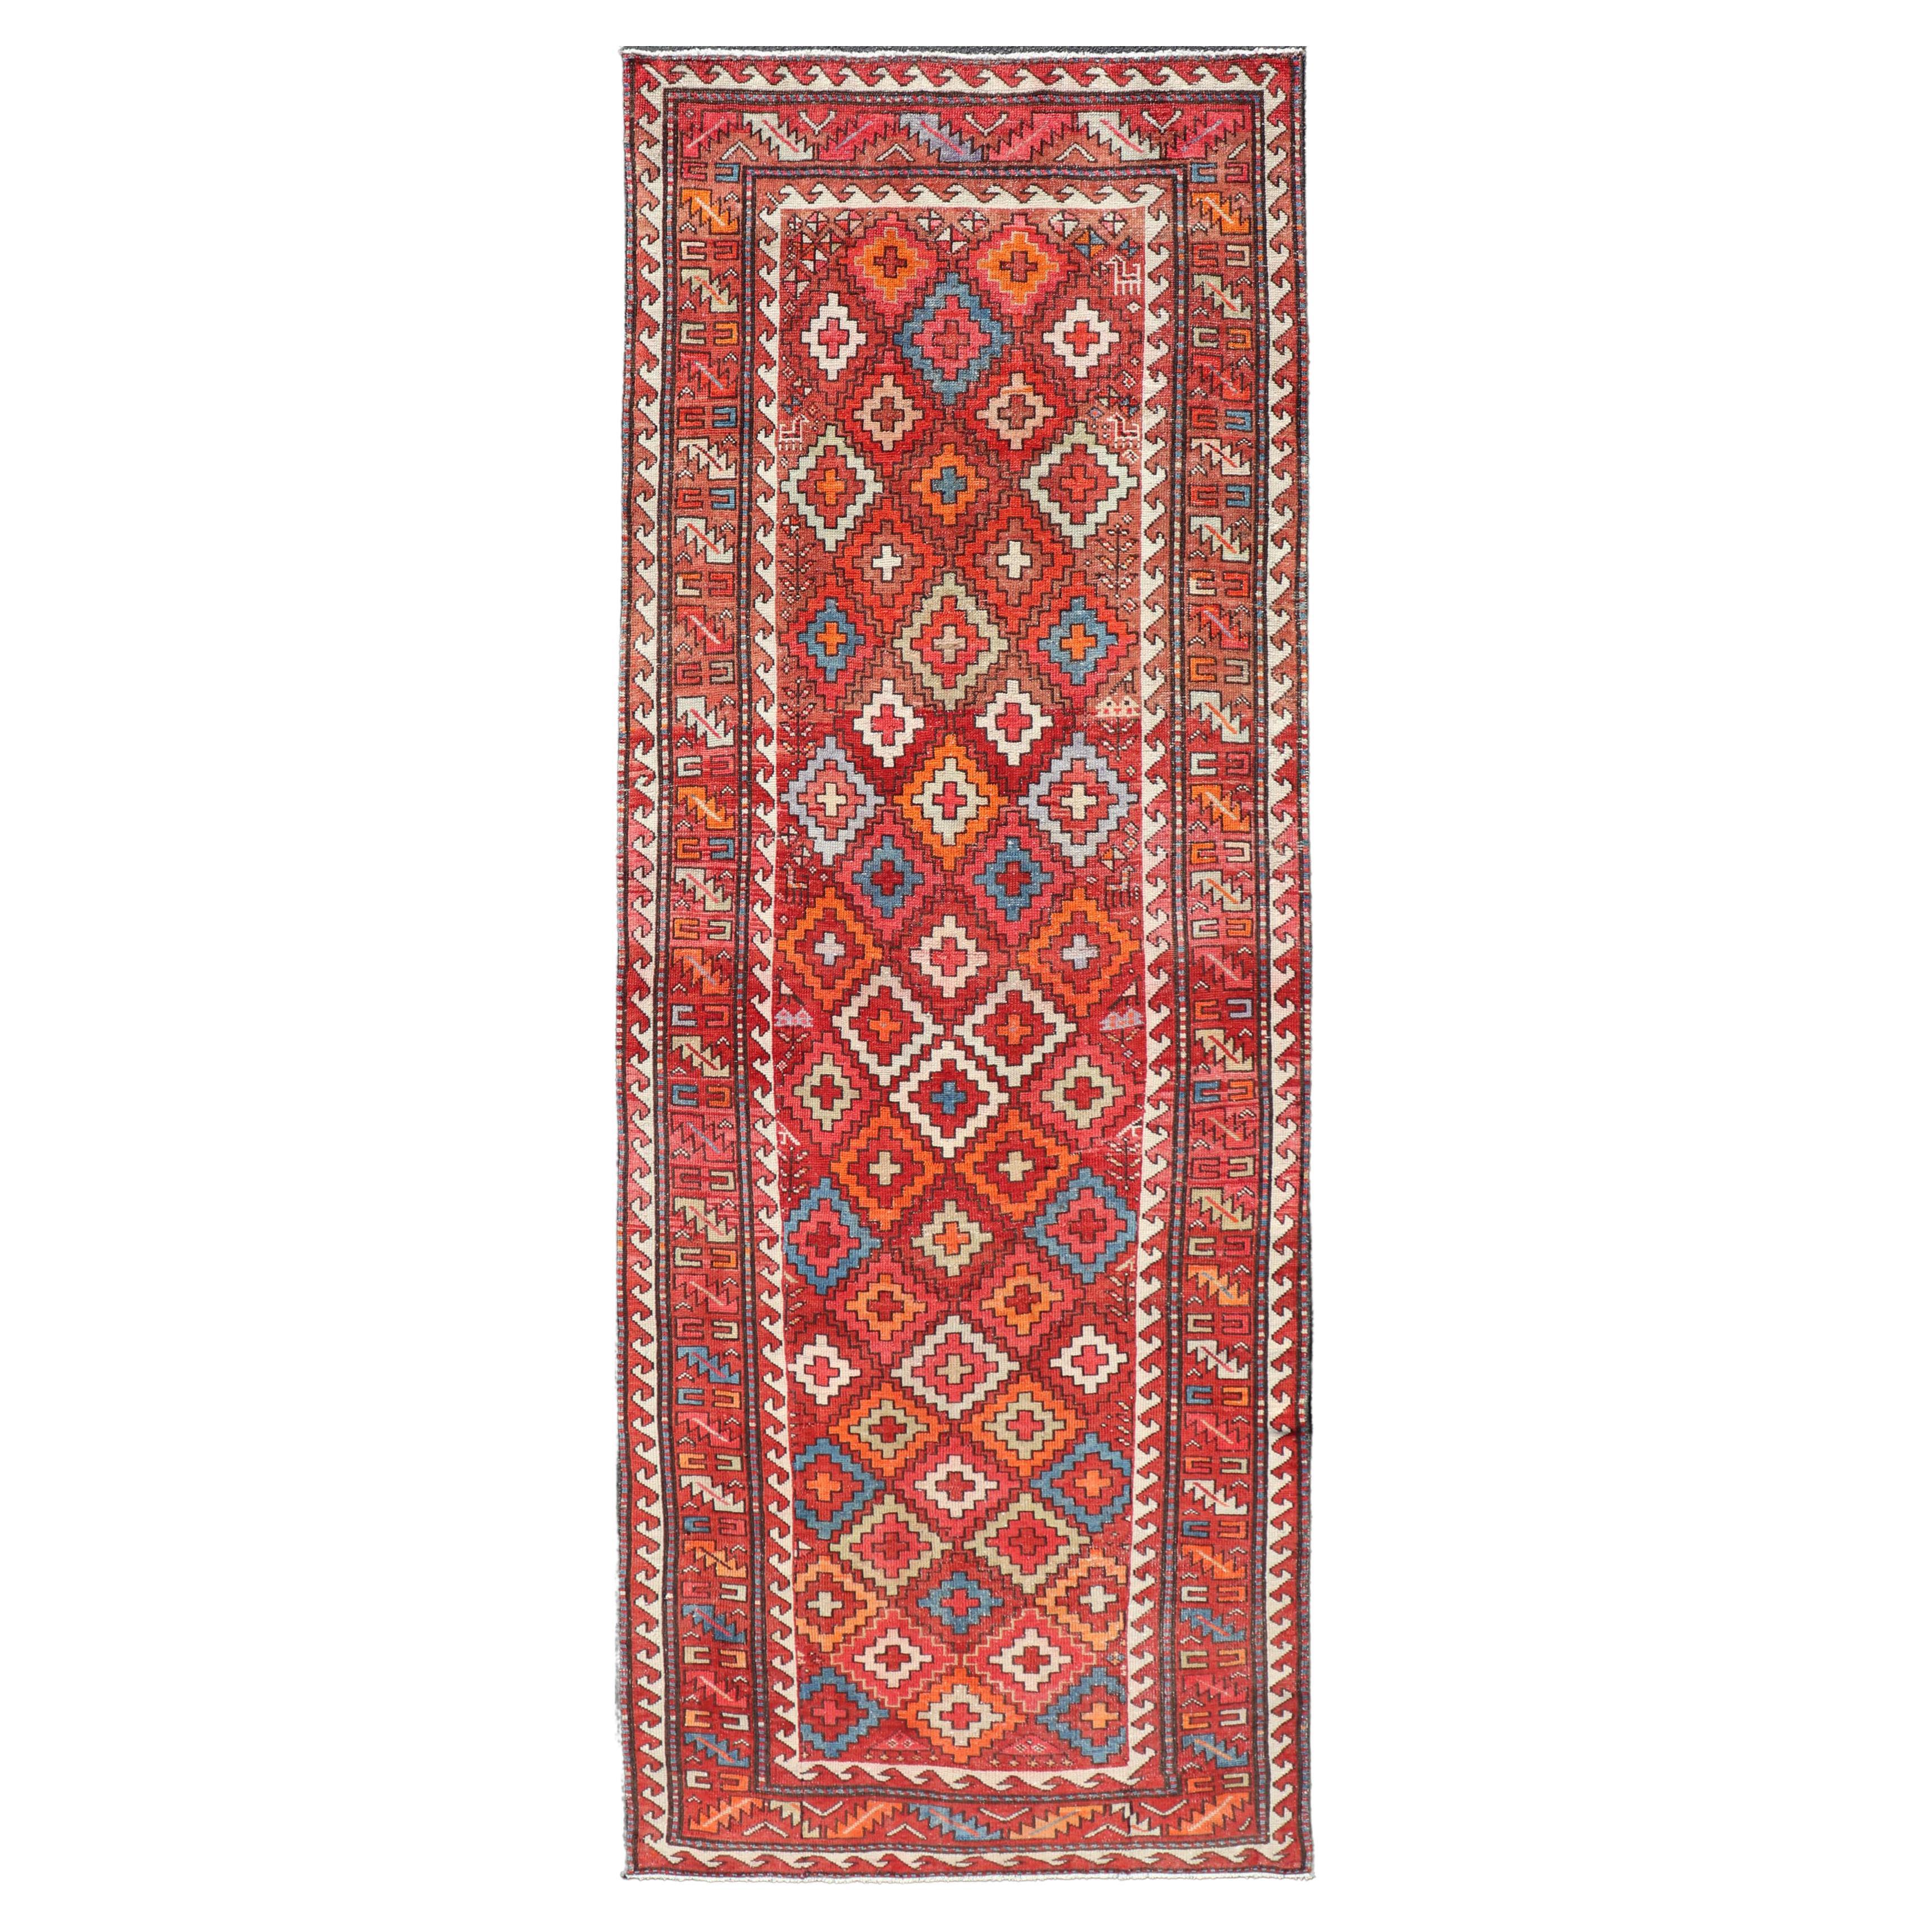 Antique Persian Fine Weave Hamadan Gallery Rug in Multi Colors in Tribal Design For Sale